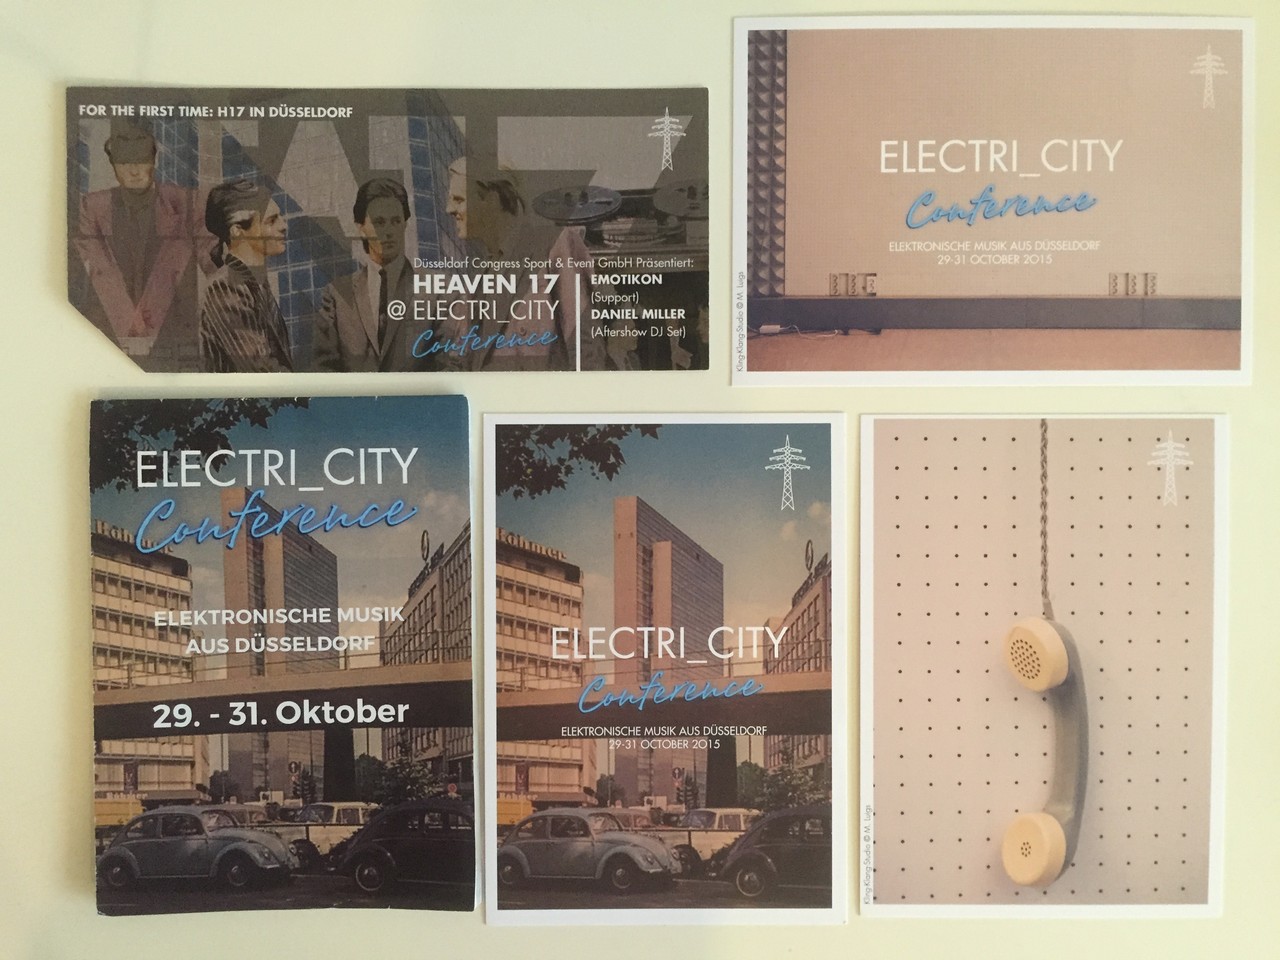 01 ELECTRI_CITY Conference 2015.jpg